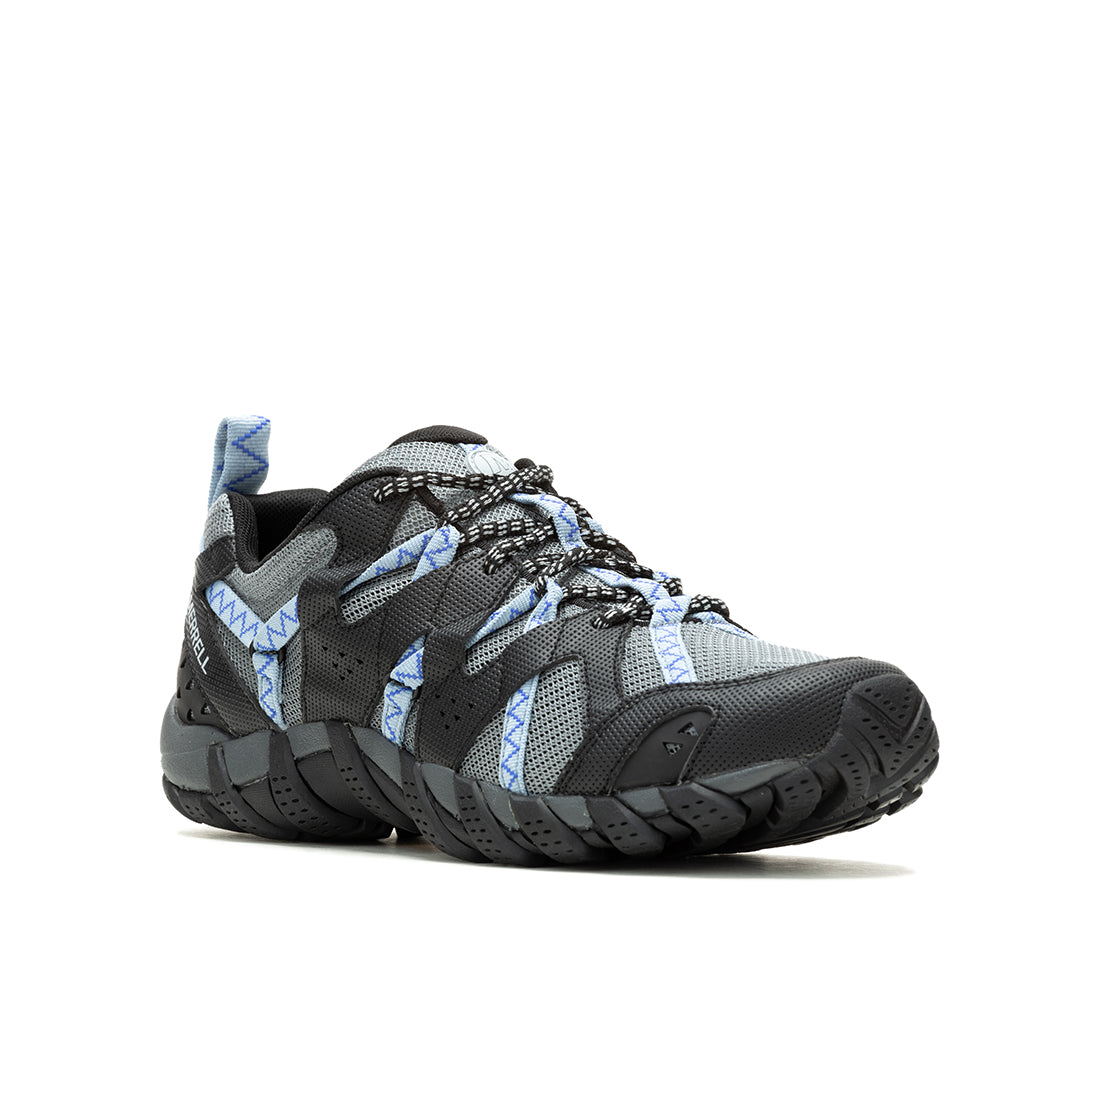 Waterpro Maipo 2 - Black/Chambray Mens Hydro Hiking Shoes